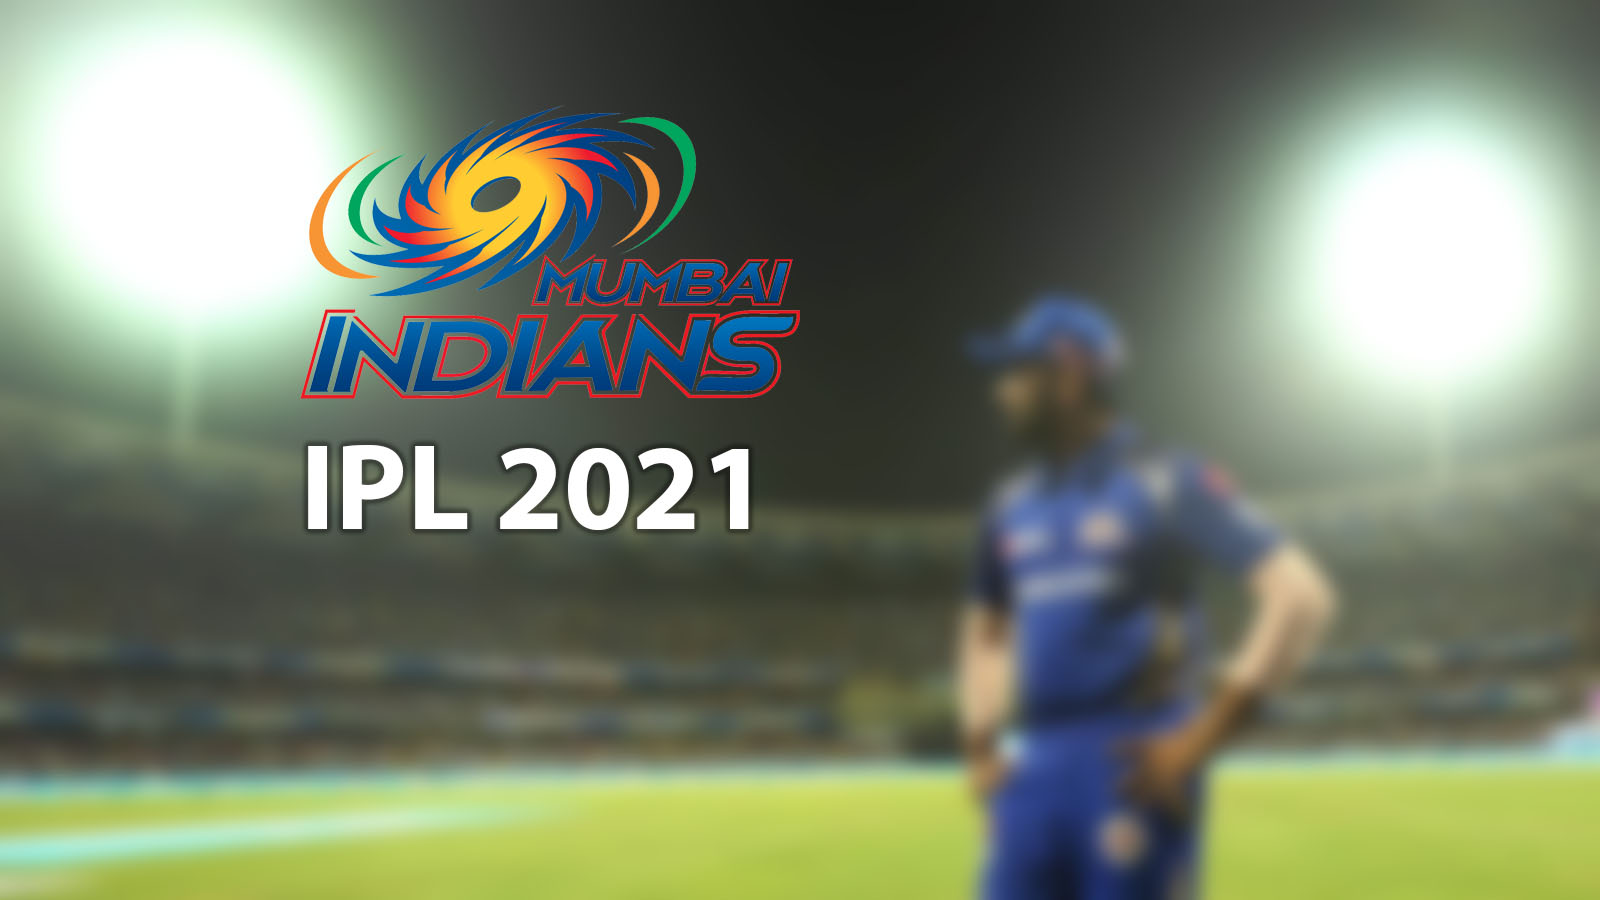 Mumbai Indians Squad / Player List for IPL 2021